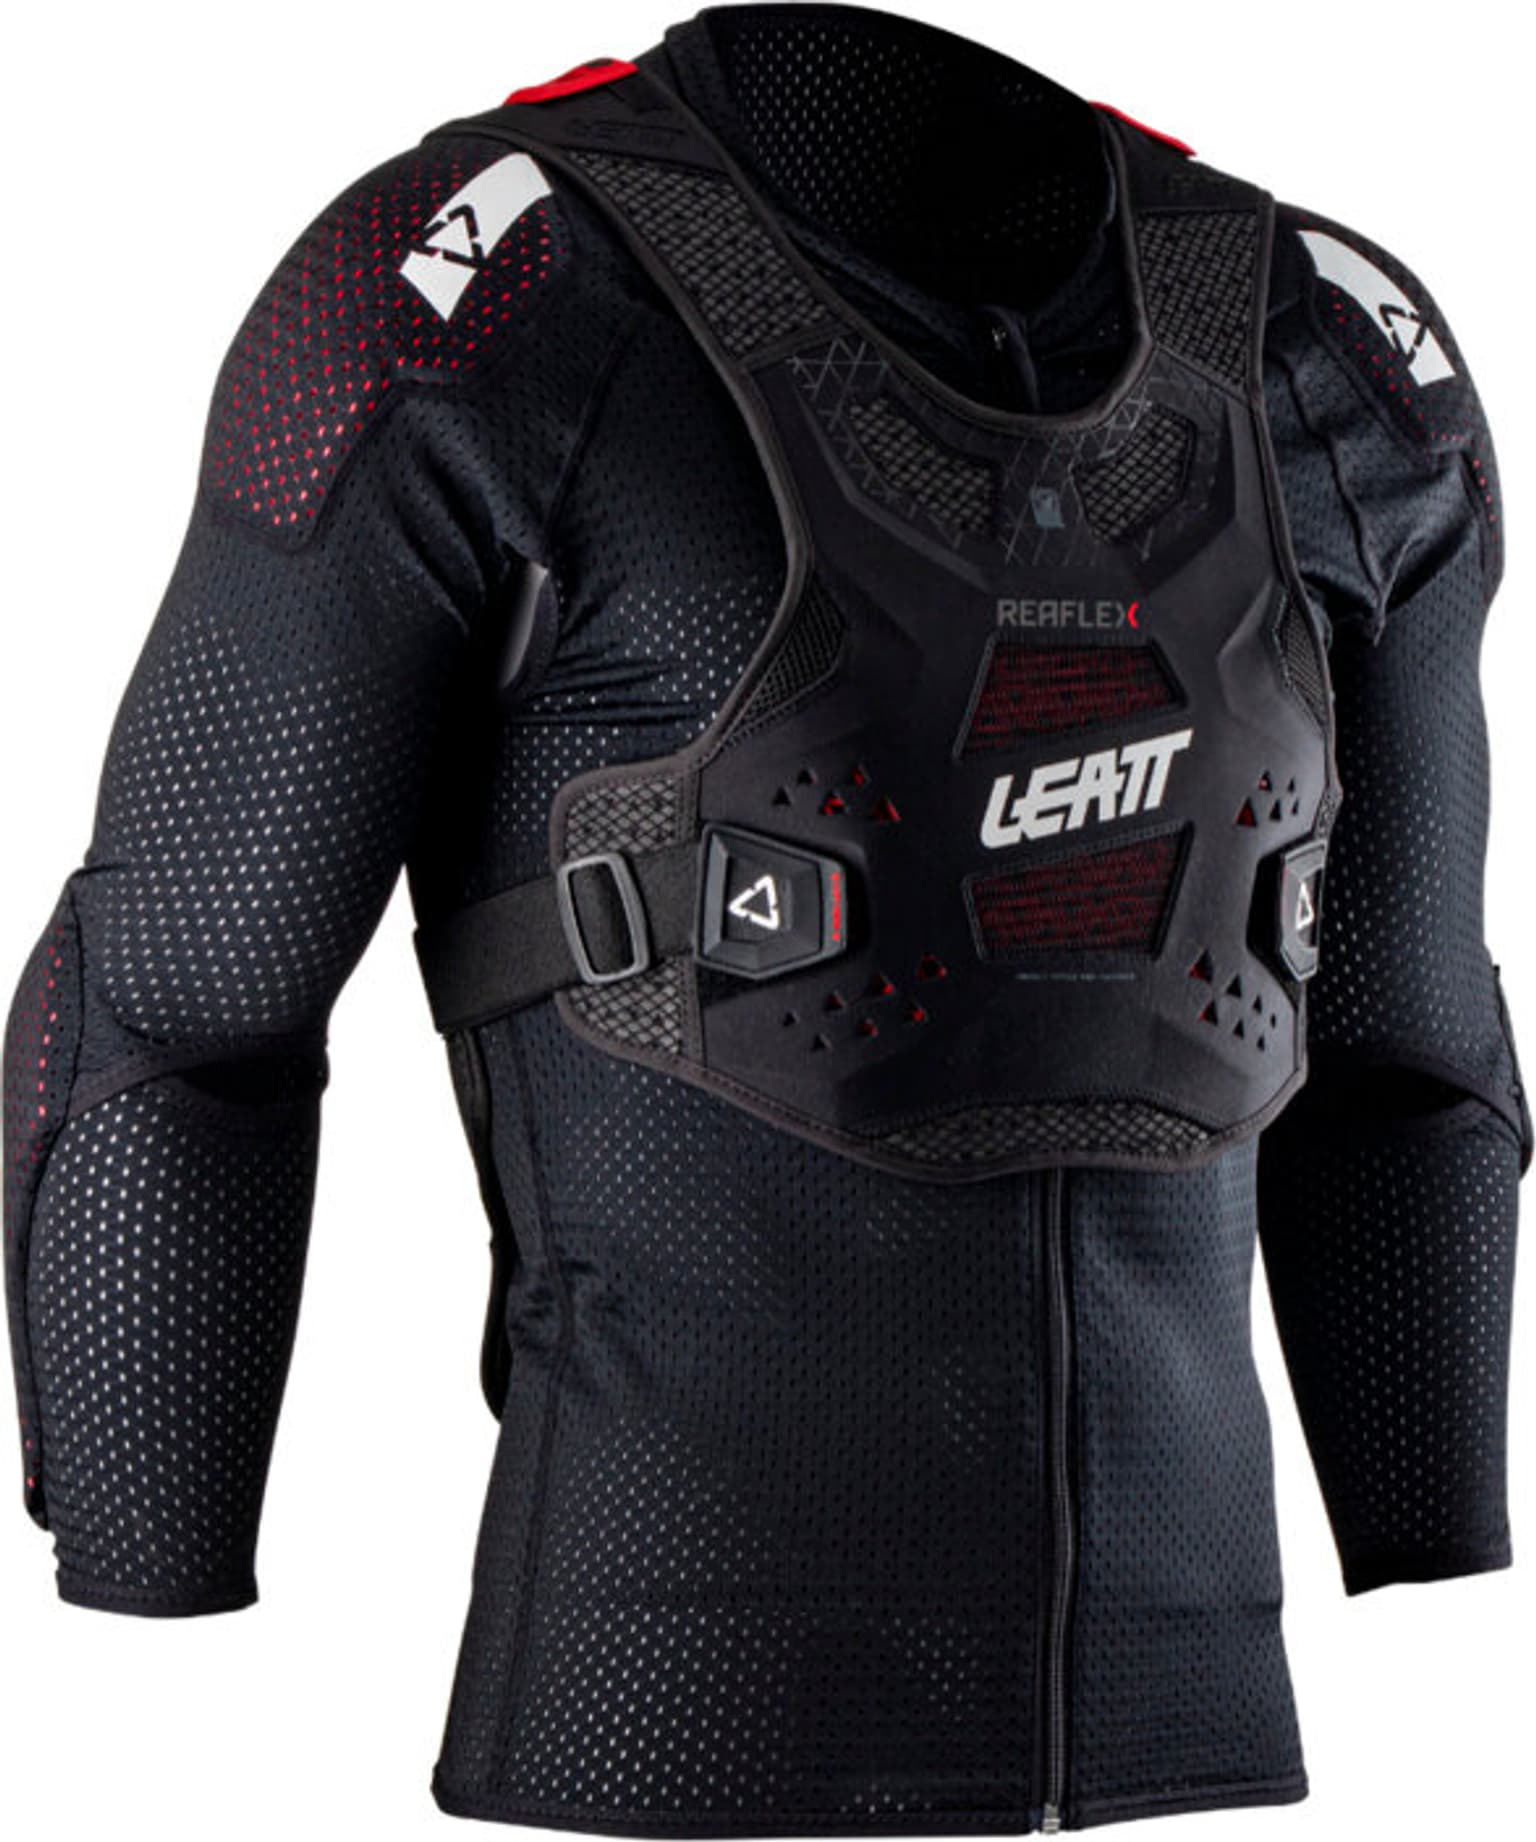 Leatt Leatt ReaFlex Body Protector Protections noir 1